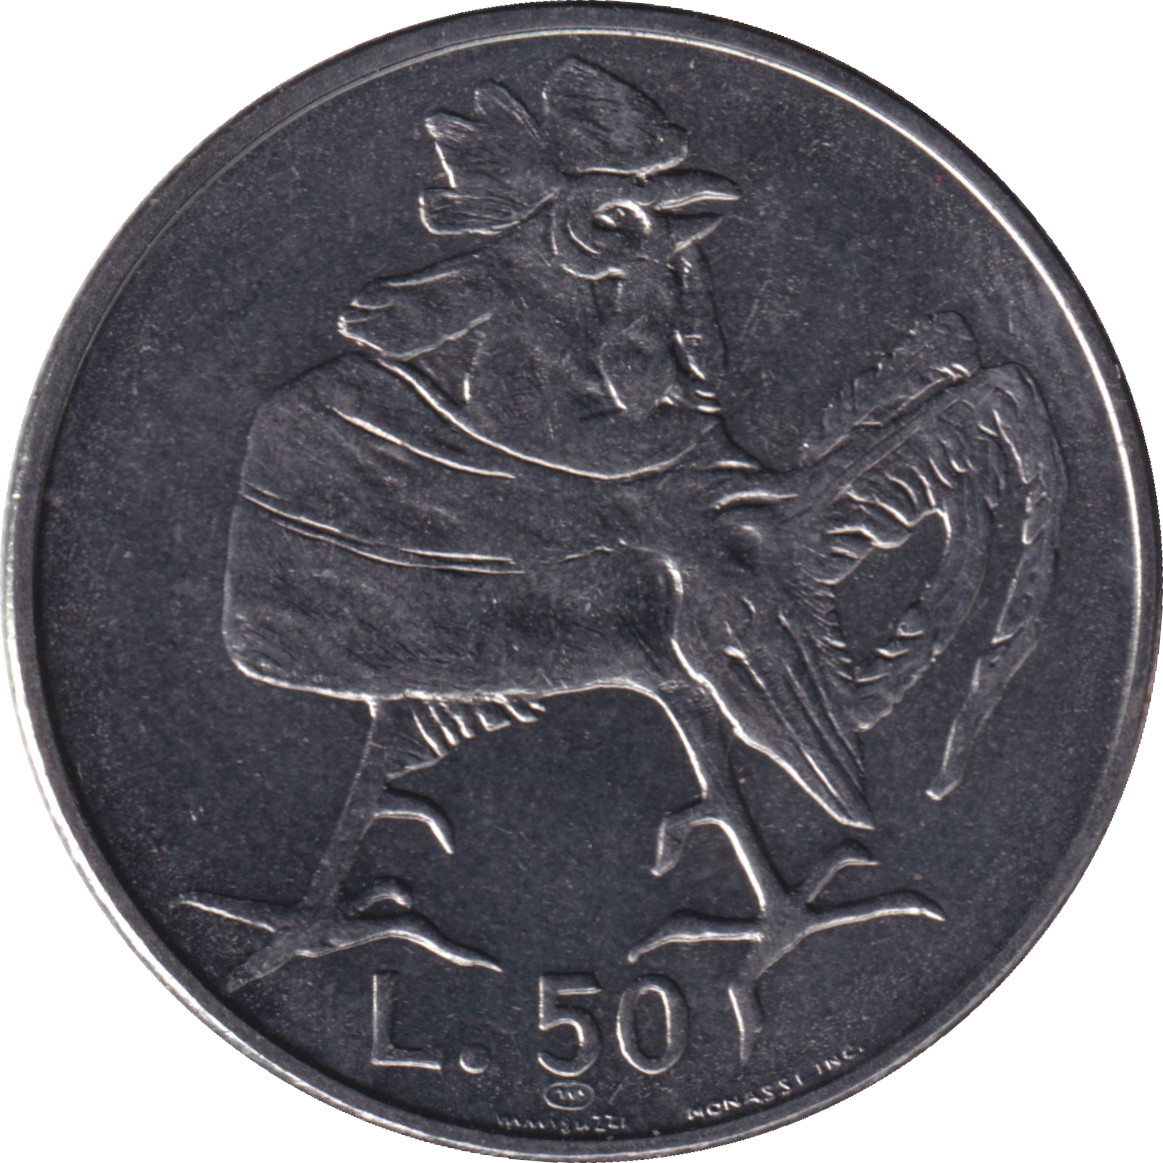 50 lire - Coq